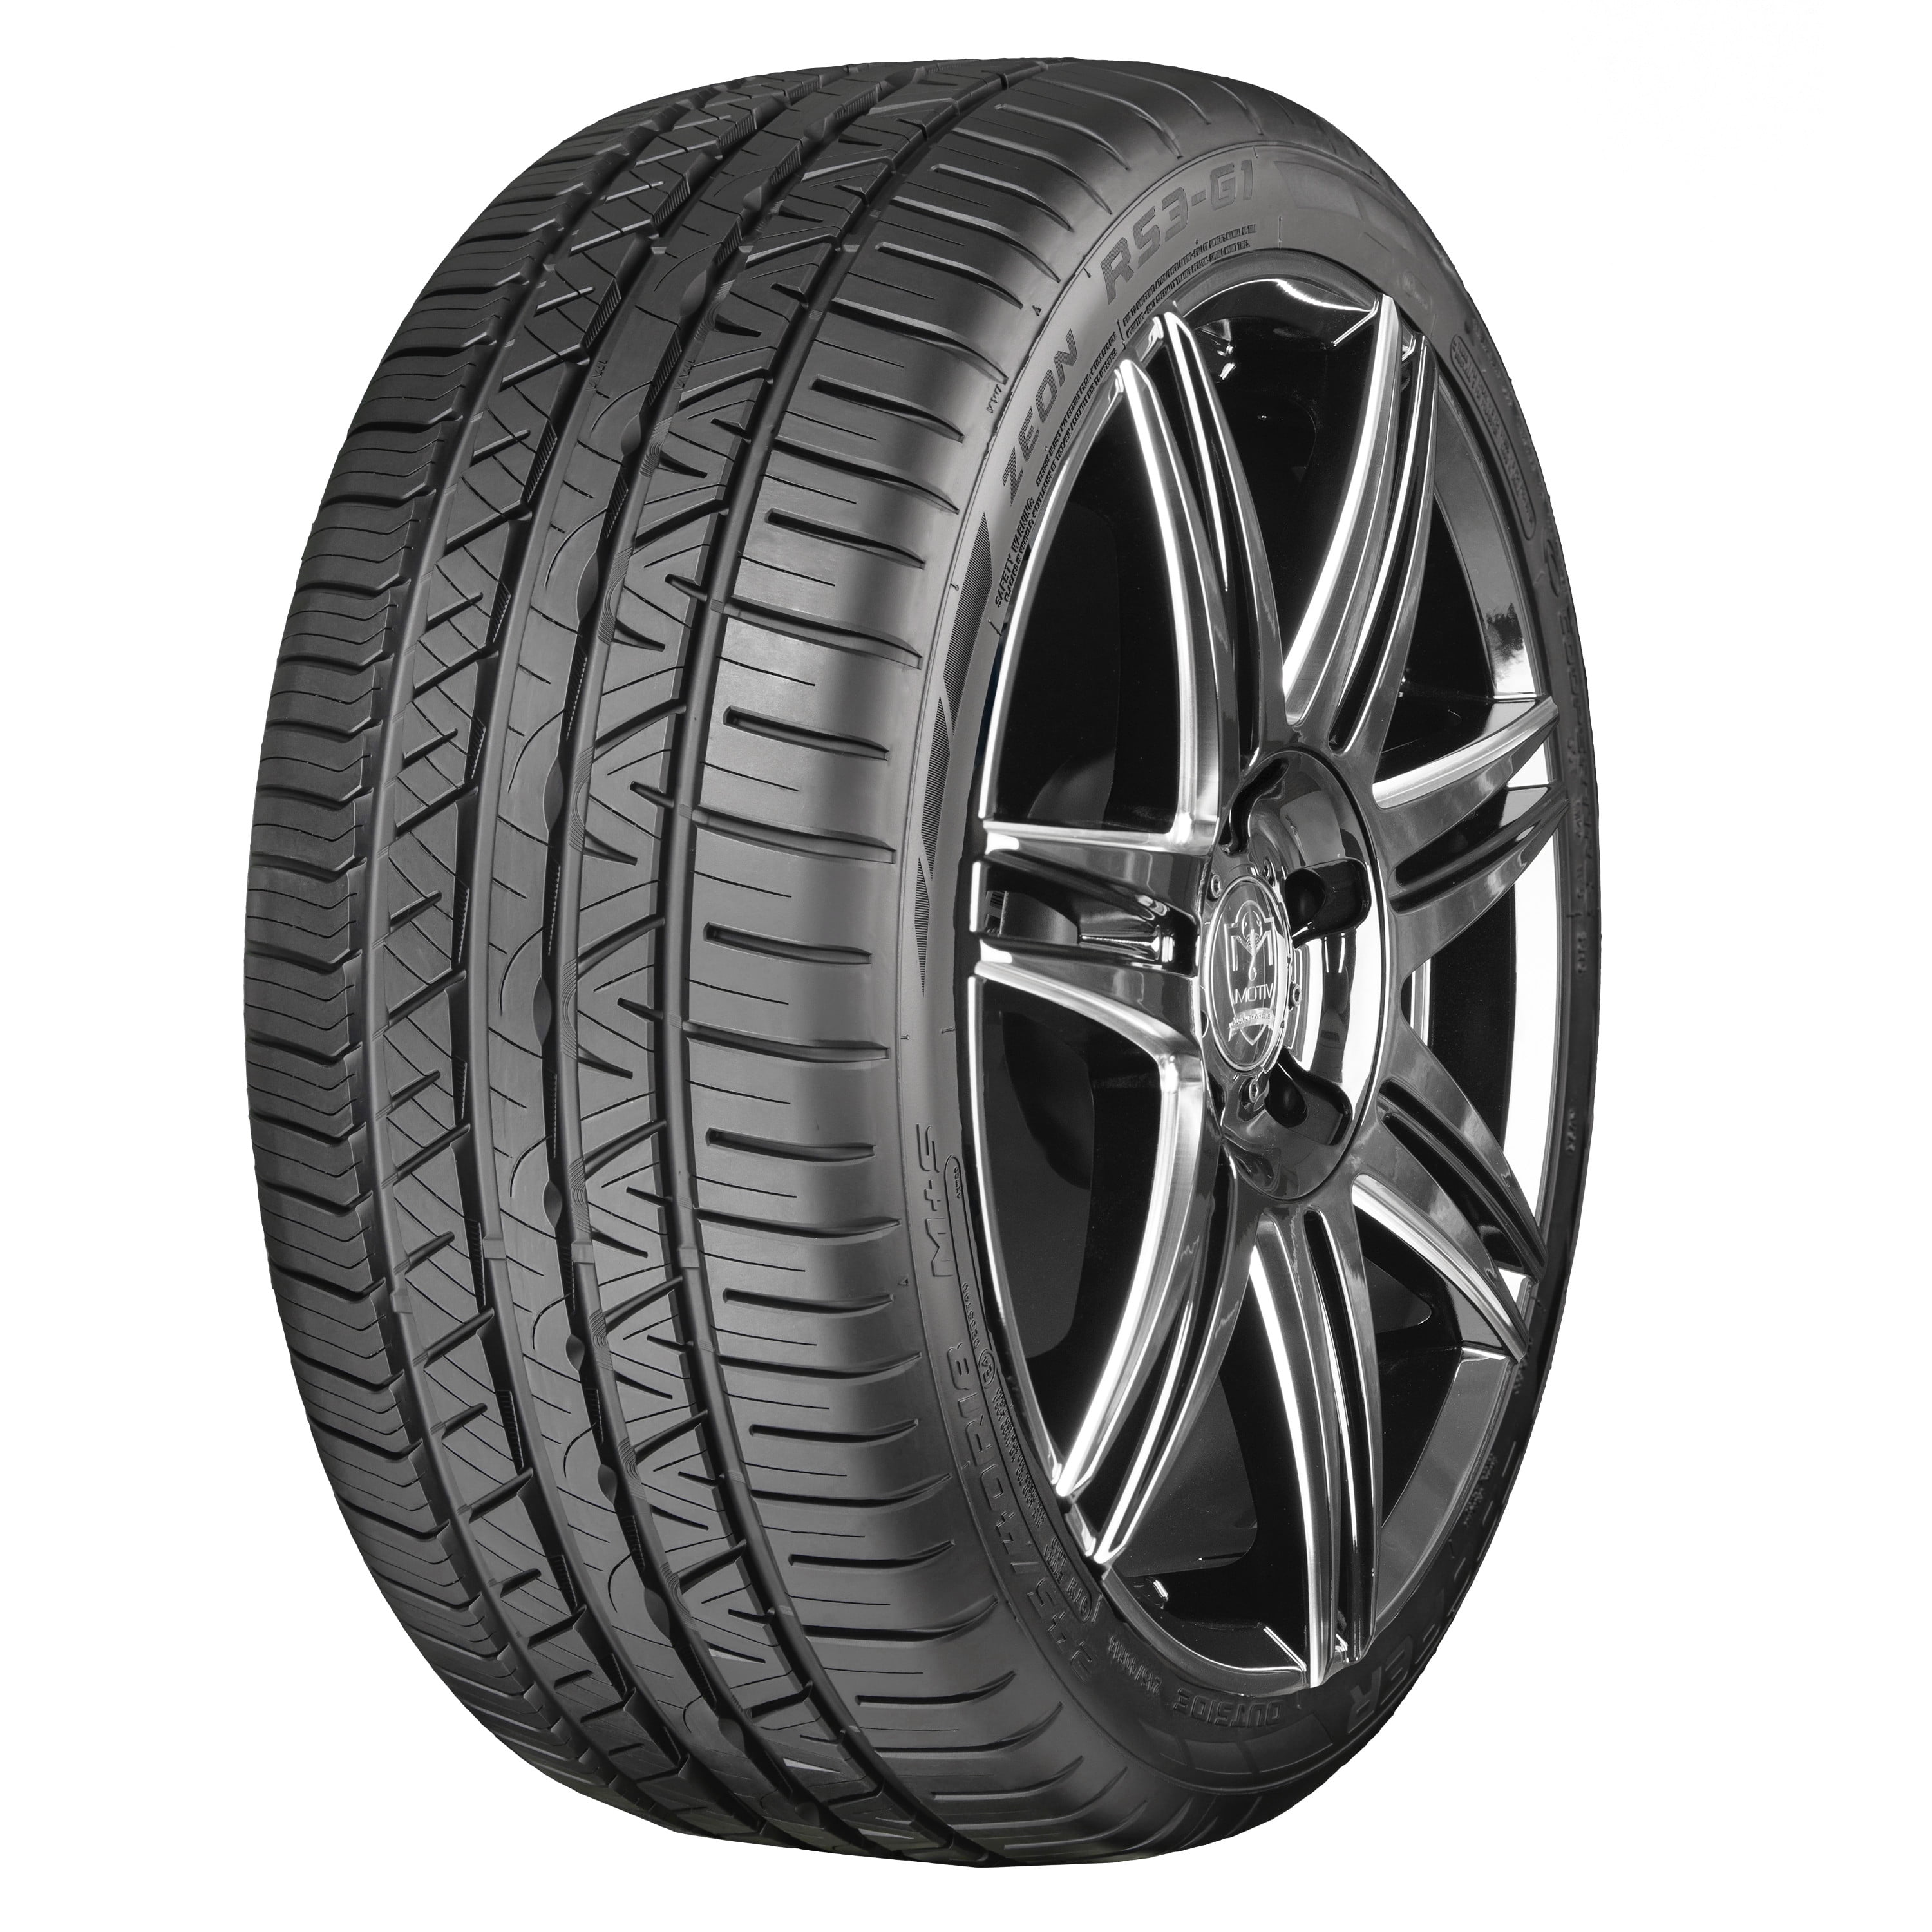 COOPER ZEON RS3G1 AllSeason 225/45R17 94W Car Tire